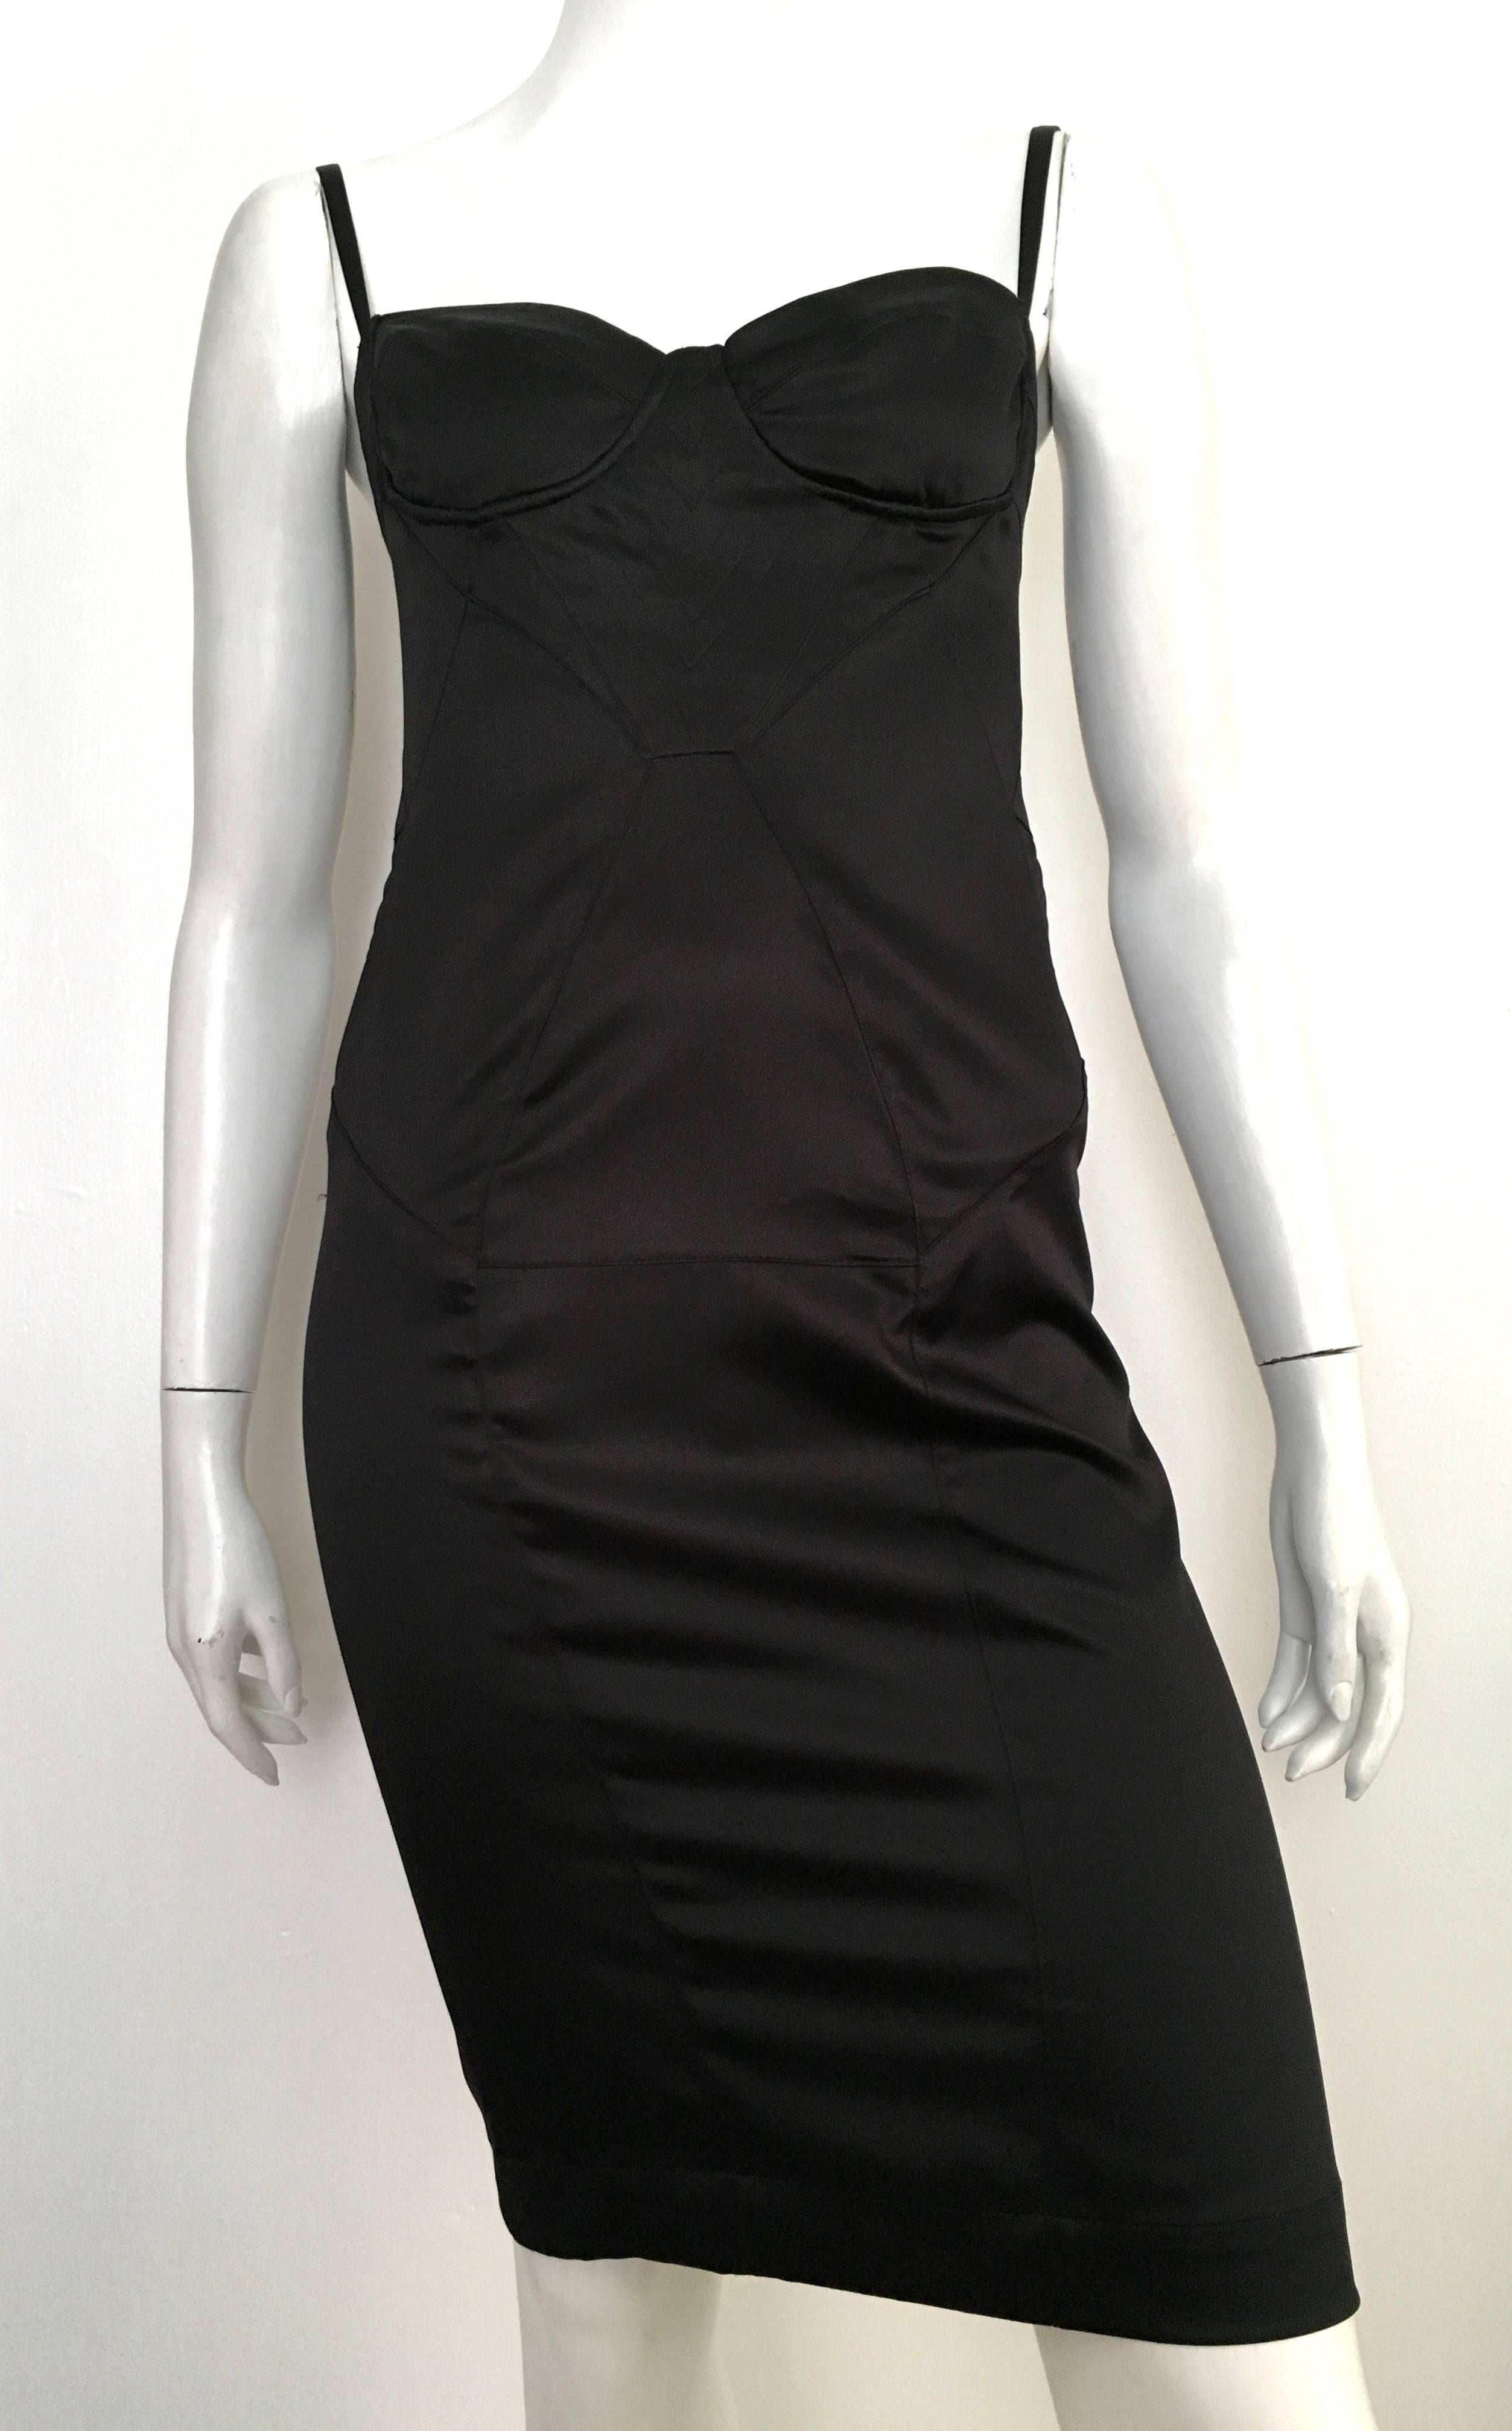 Cavalli Black Stretch Dress Size 4. 4